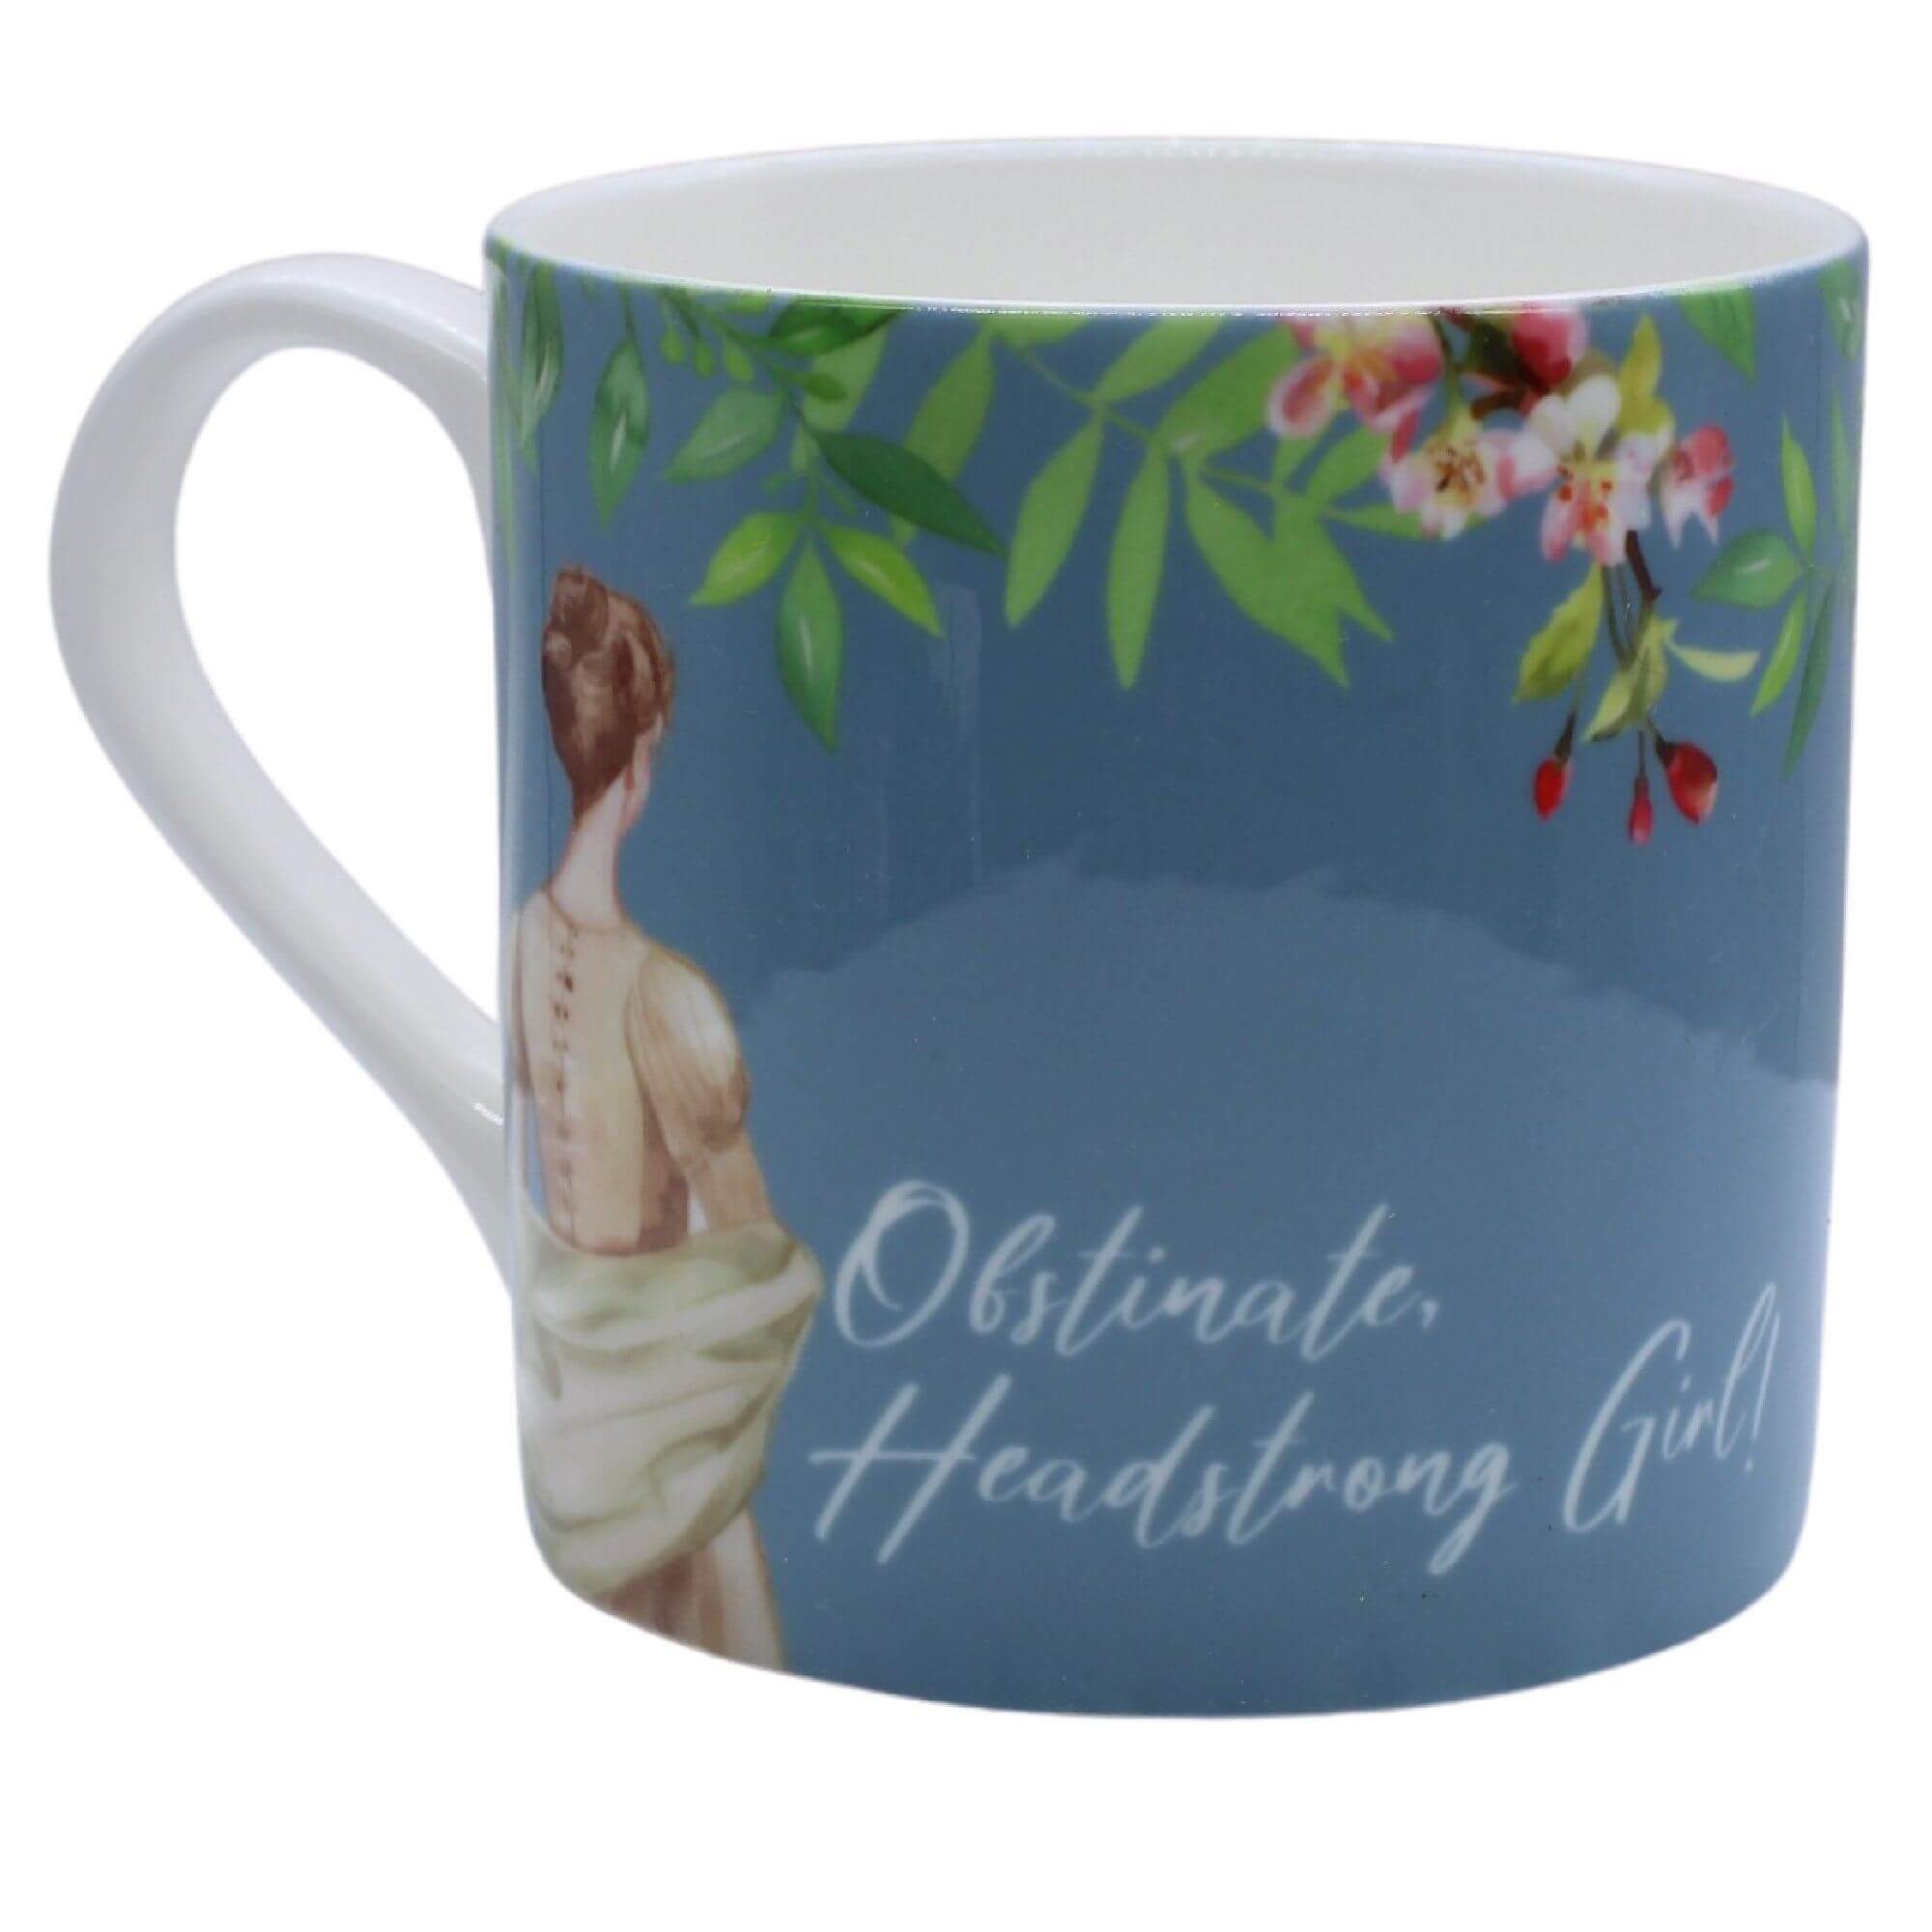 Obstinate, Headstrong Girl! (Jane Austen) Blue  Mug Mugs Mustard and Gray Ltd Shropshire UK